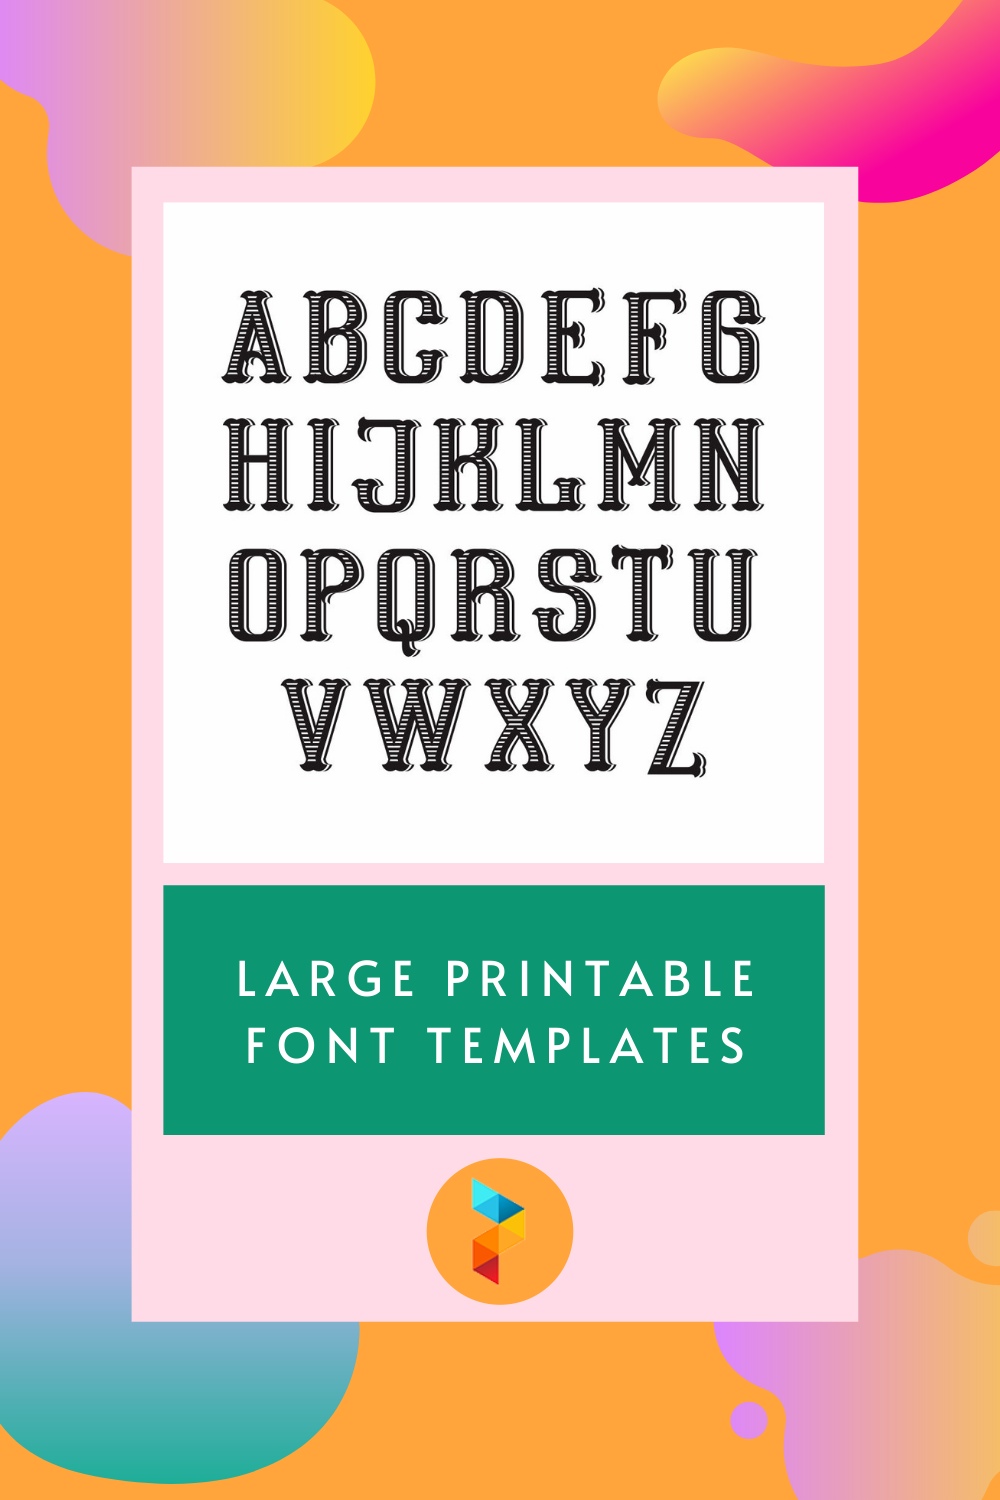 Large Printable Font Templates